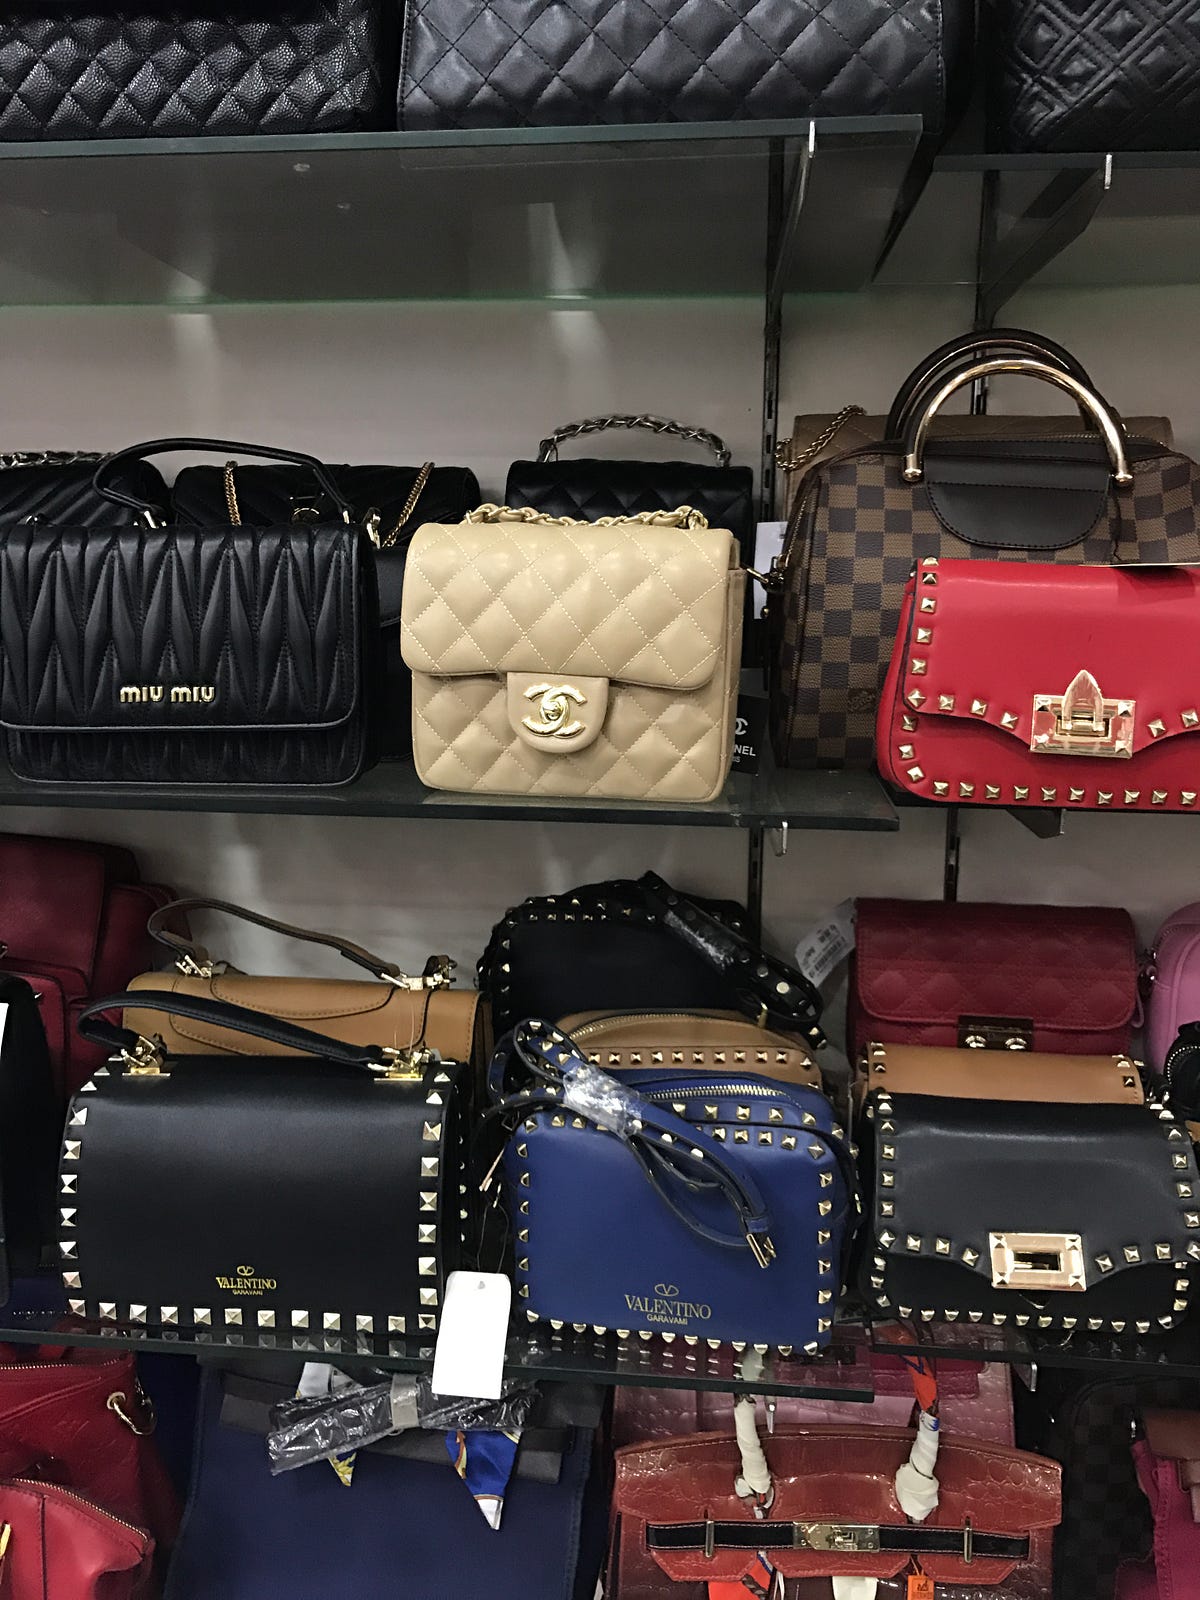 The Truth About Counterfeit Luxury Handbags - Becca Risa Luna - Medium